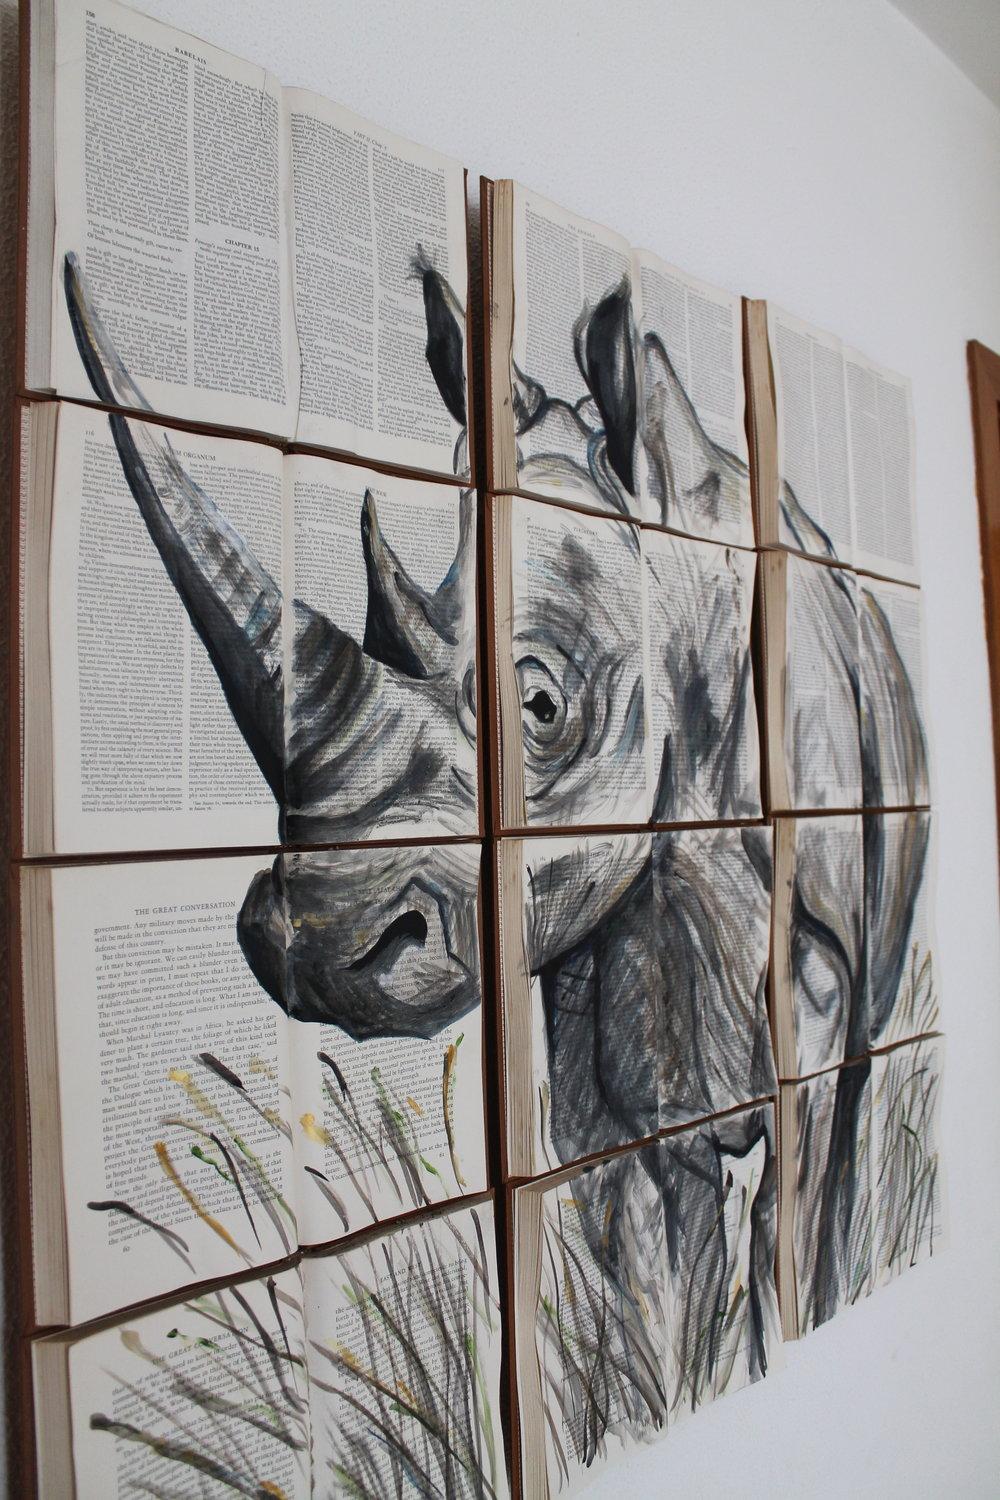 rhinoceros painting